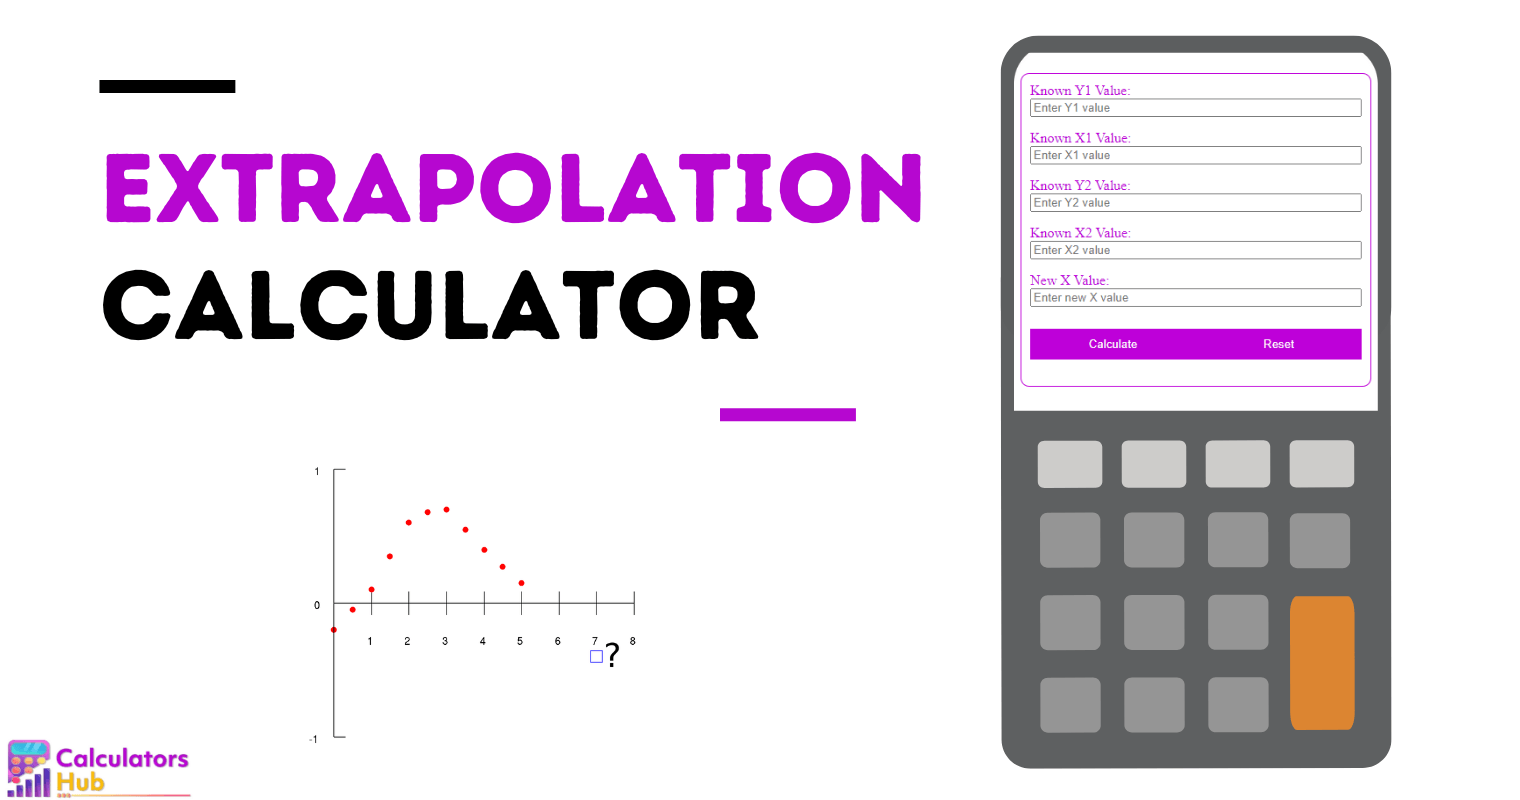 Calculateur d'extrapolation